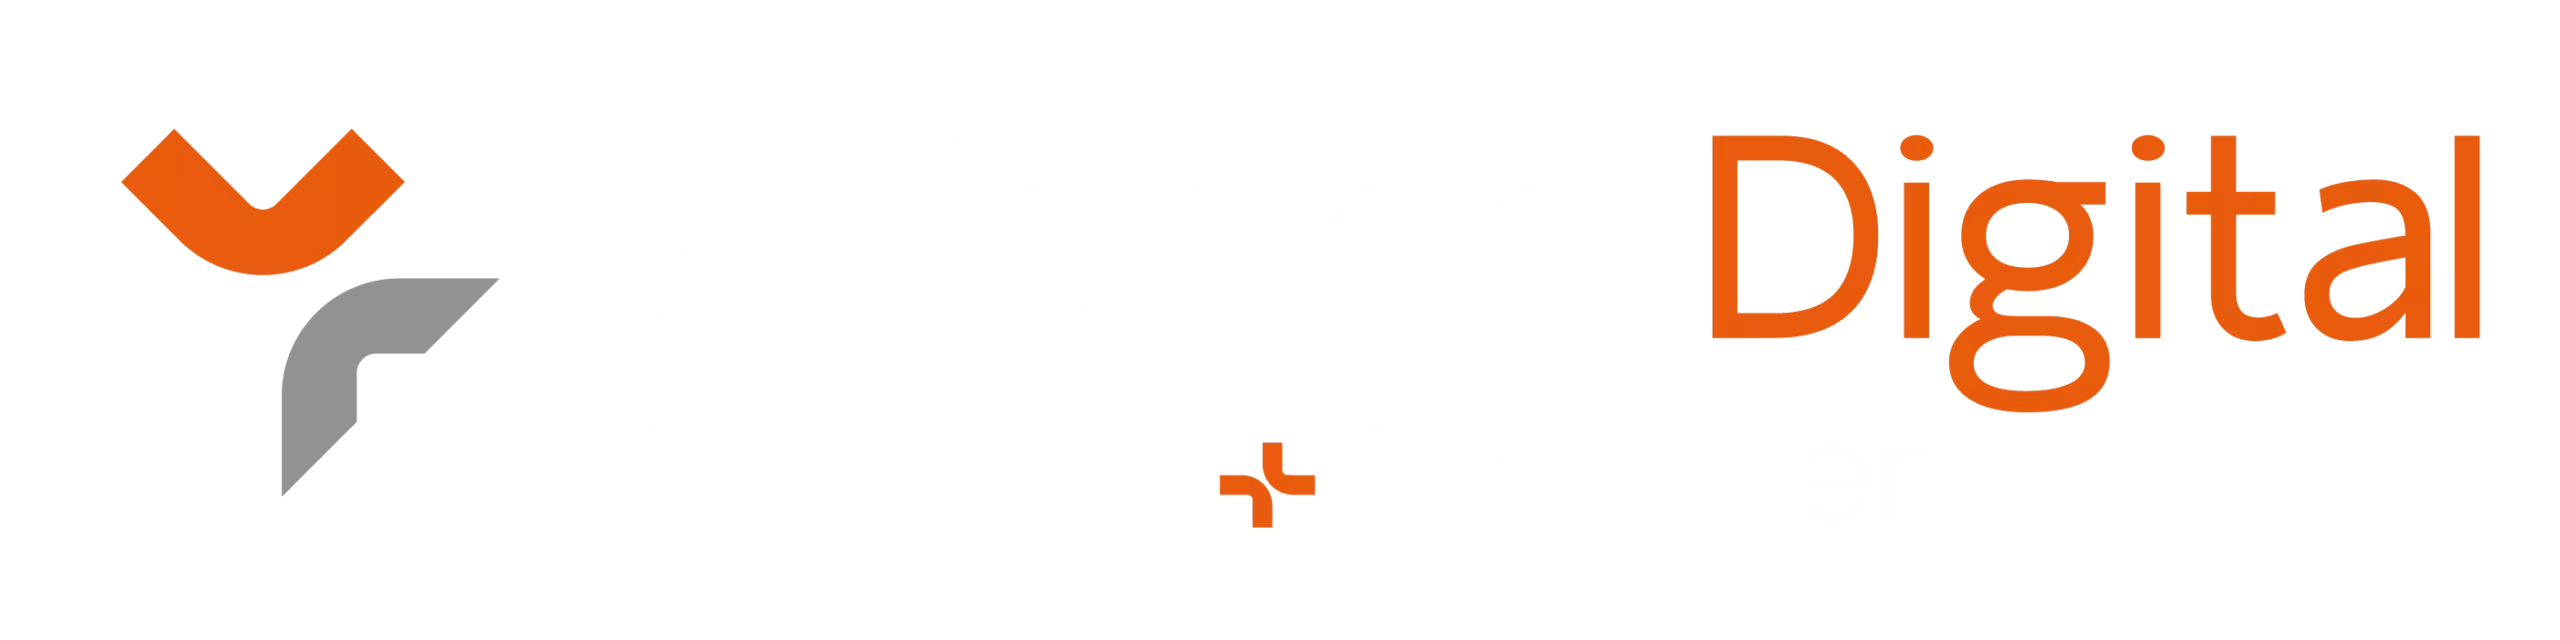 Alliance Digital